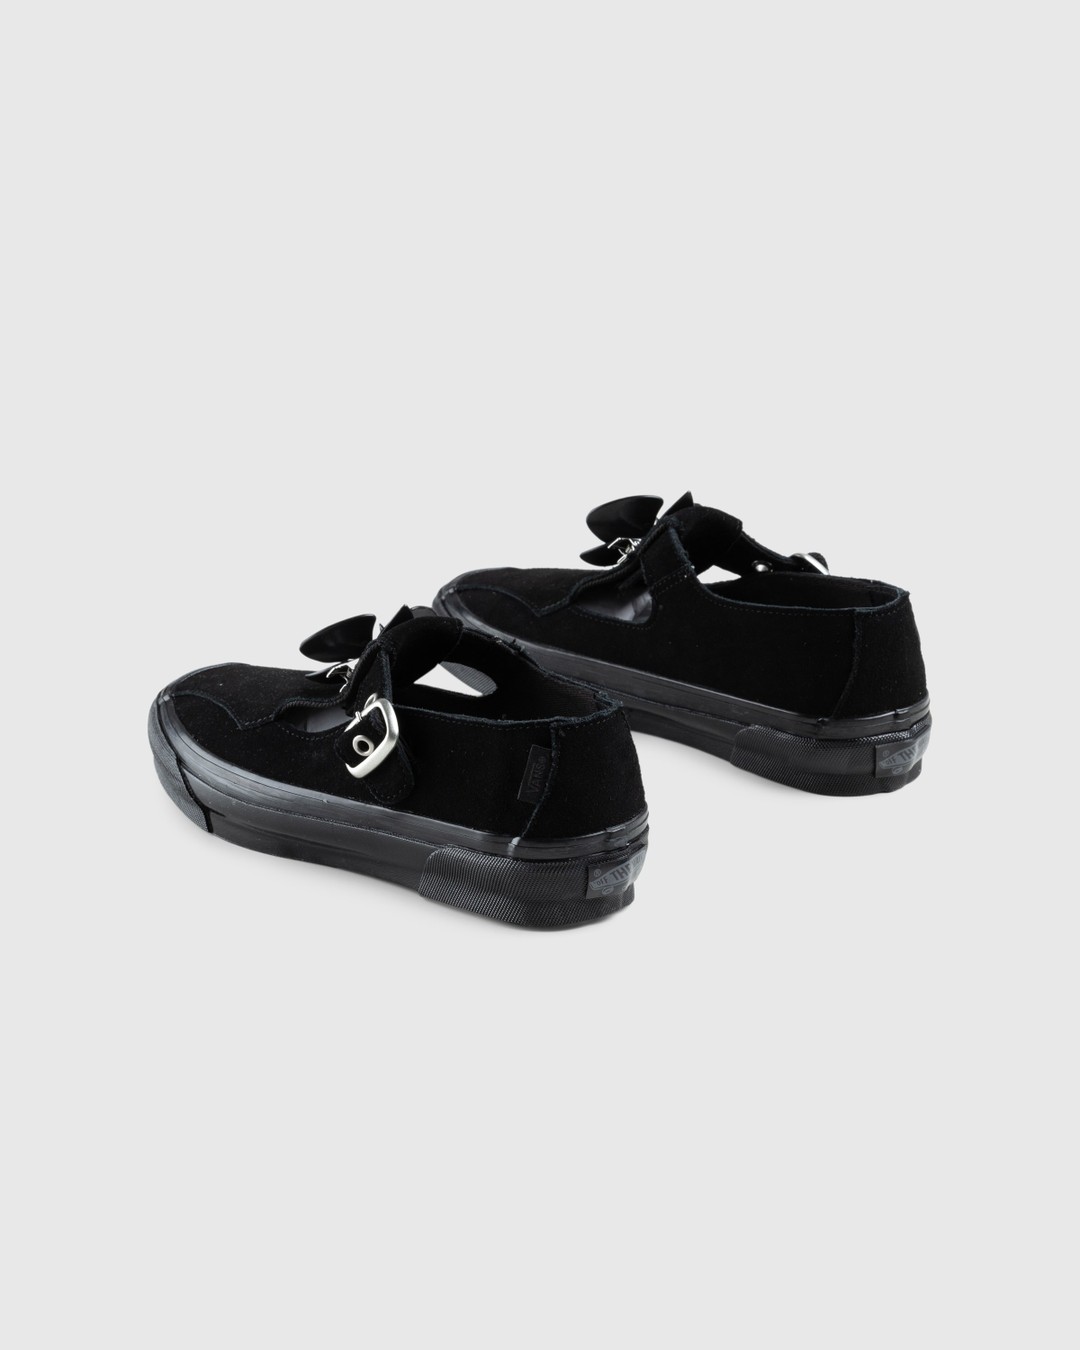 Vans – OG Style 93 LX Black - Sneakers - Black - Image 5